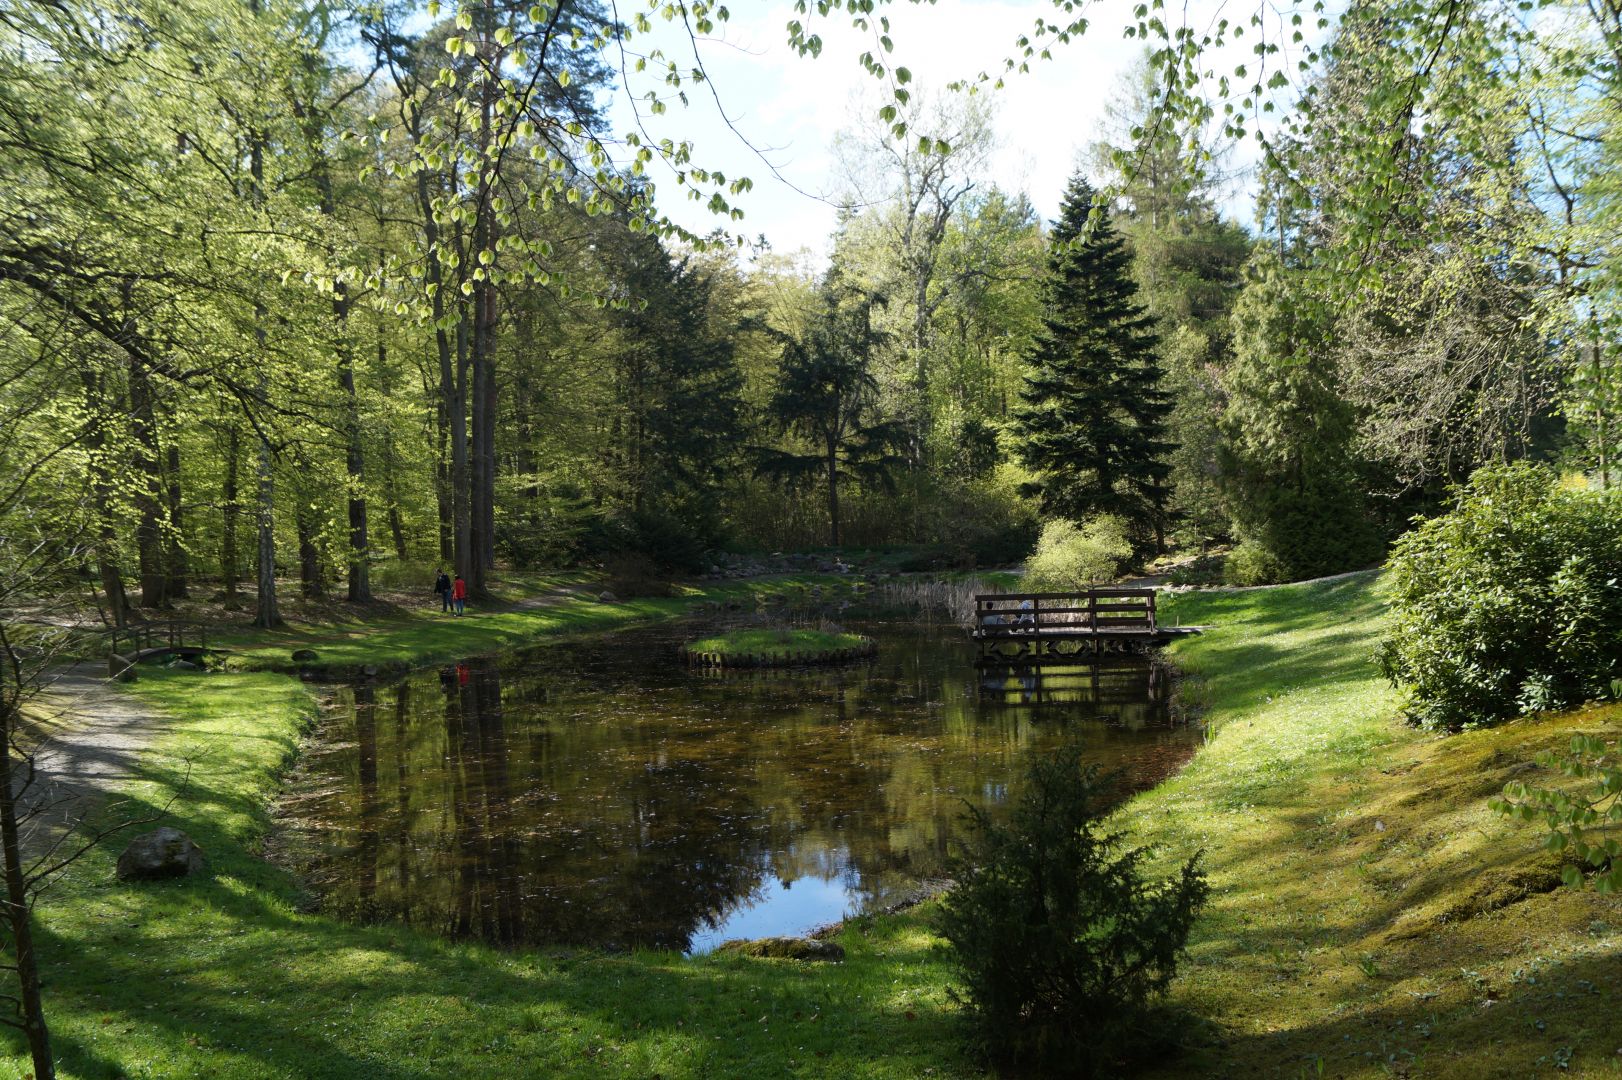 Lush greenery in the Wirtach Arboretum